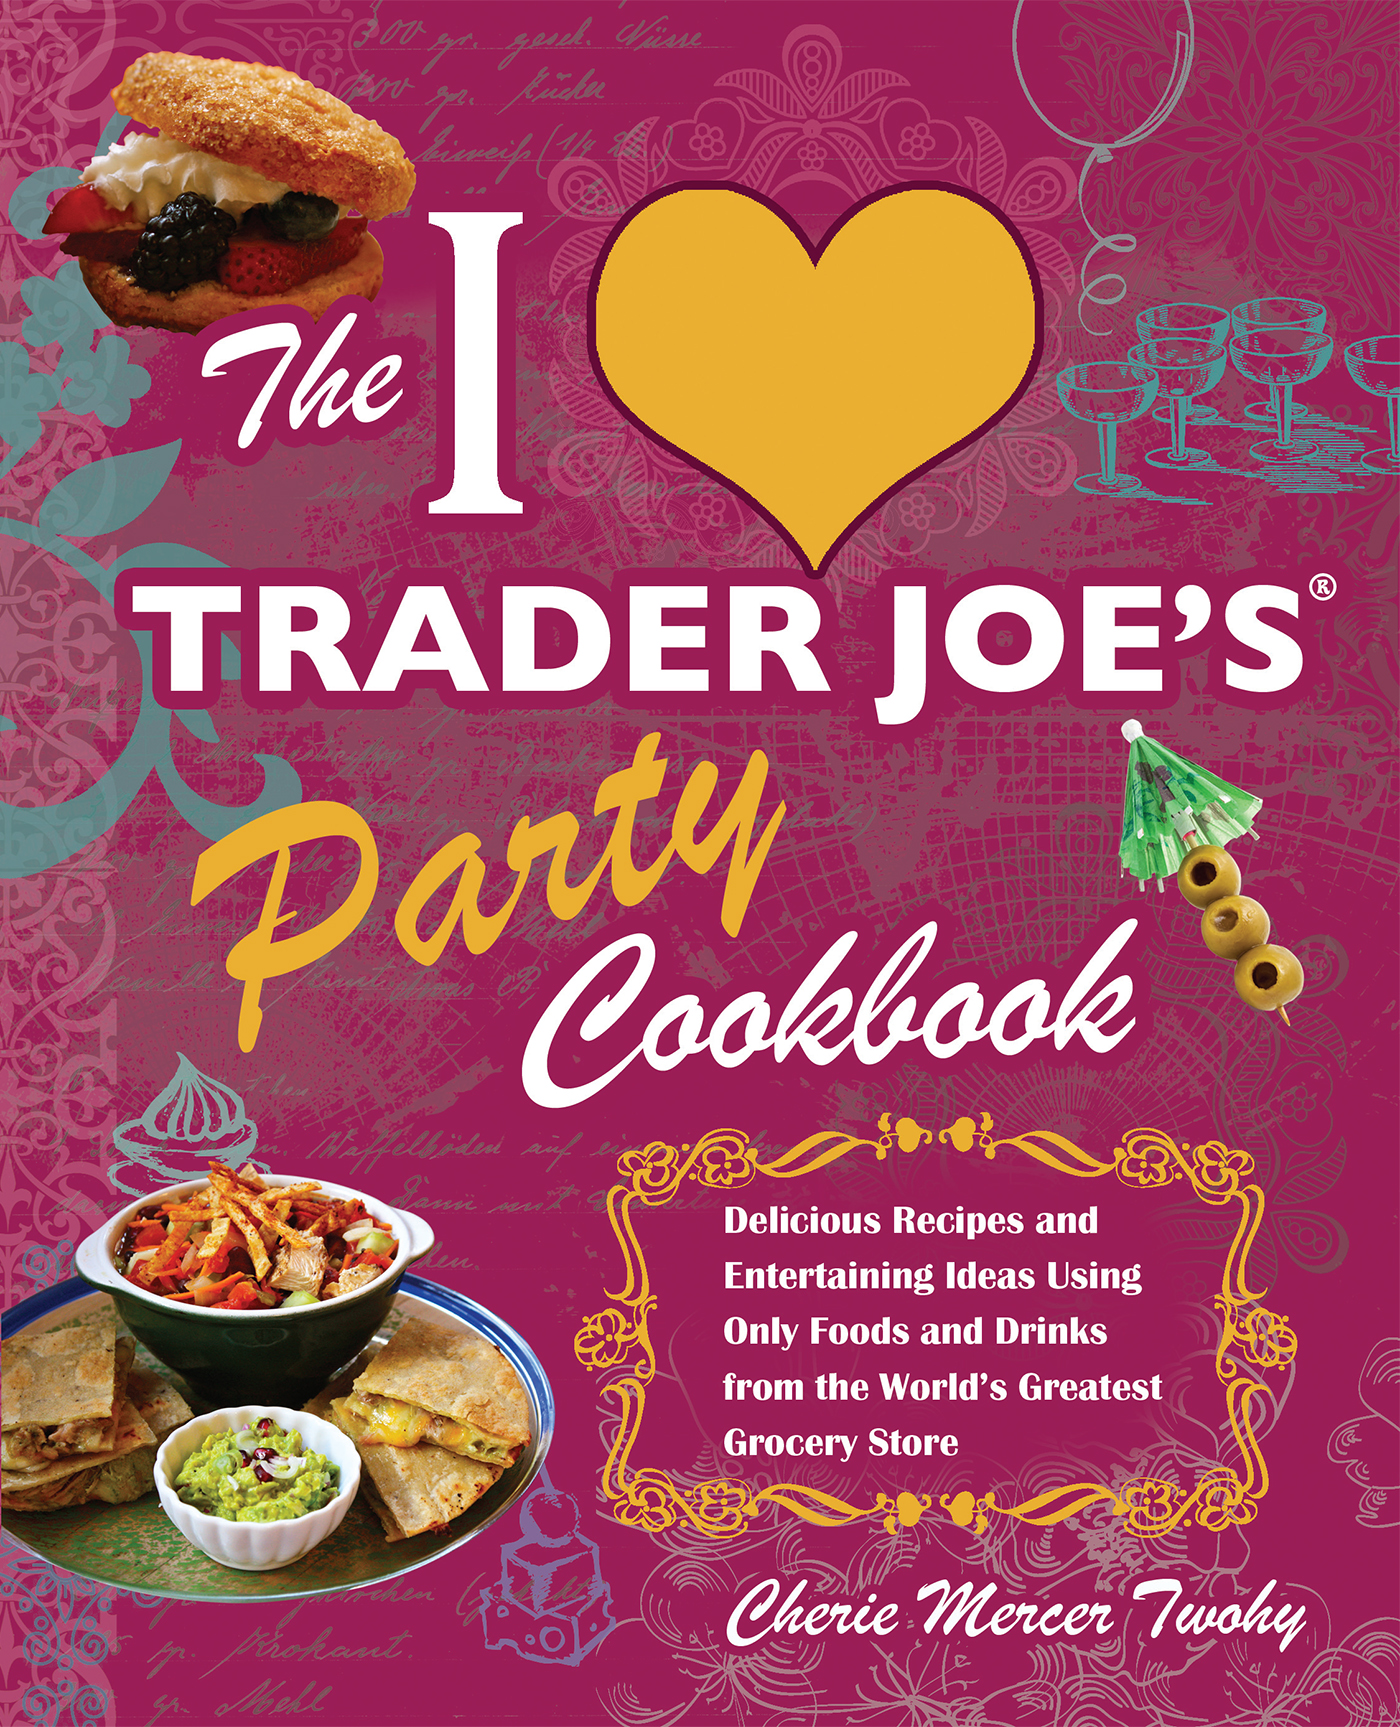 I Love Trader Joe's Party Cookbook